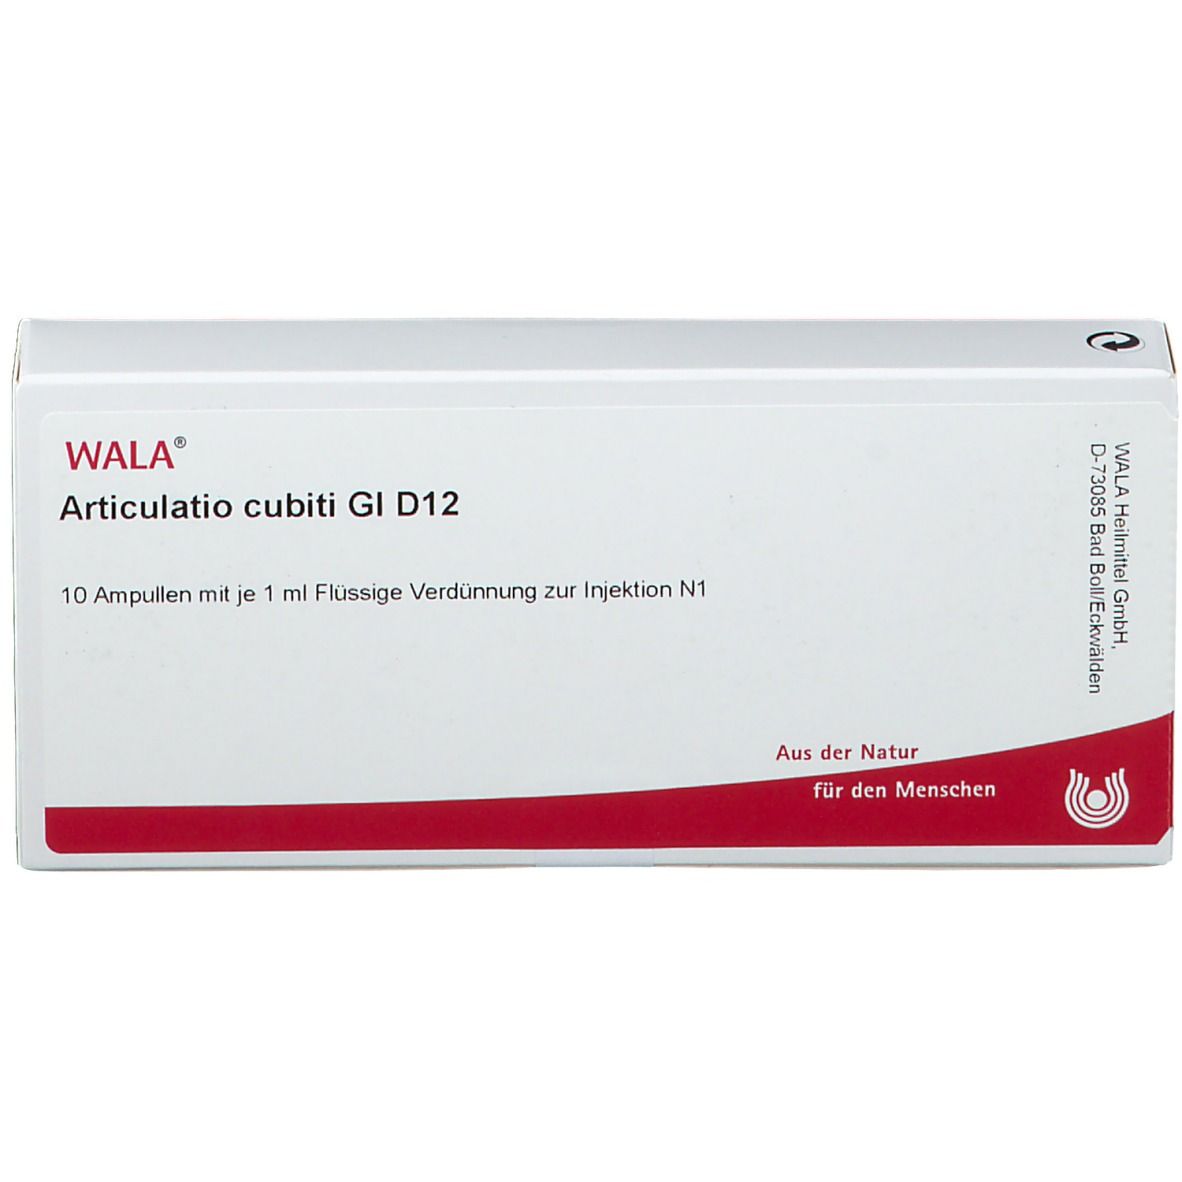 WALA® Articulatio cubiti Gl D 12